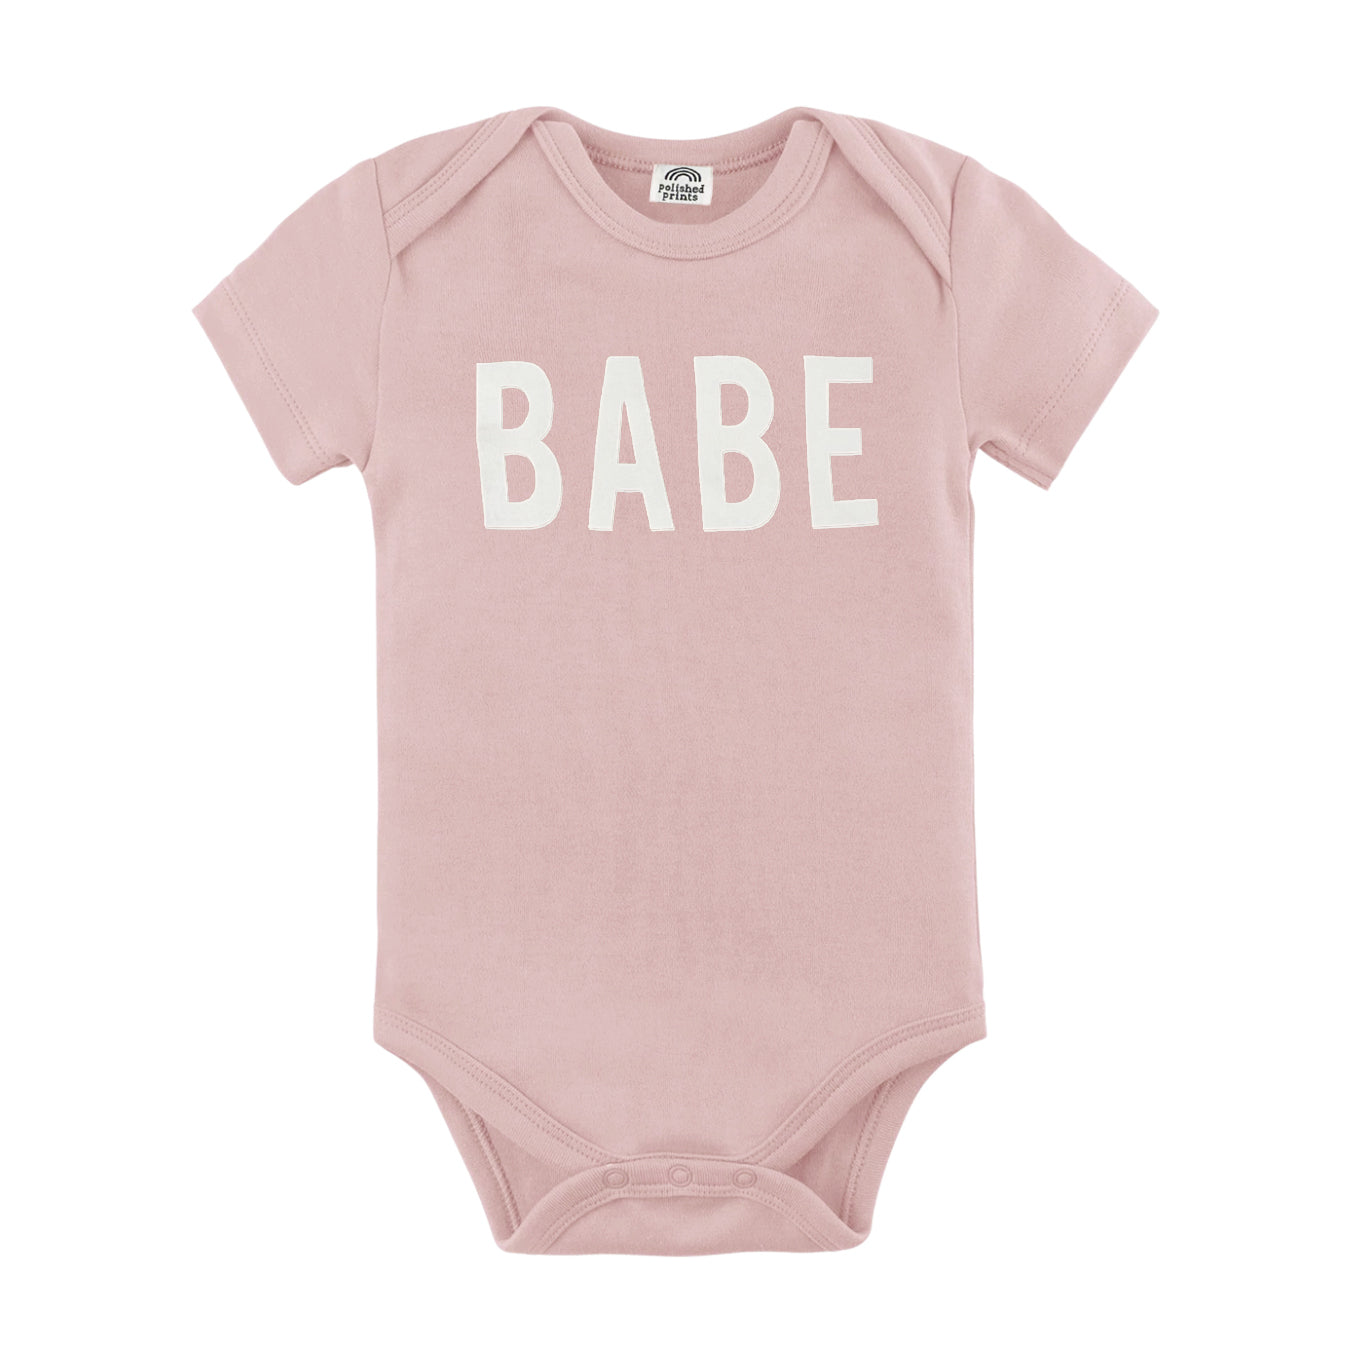 BABE Infant Onesie- Pink - HoneyBug 